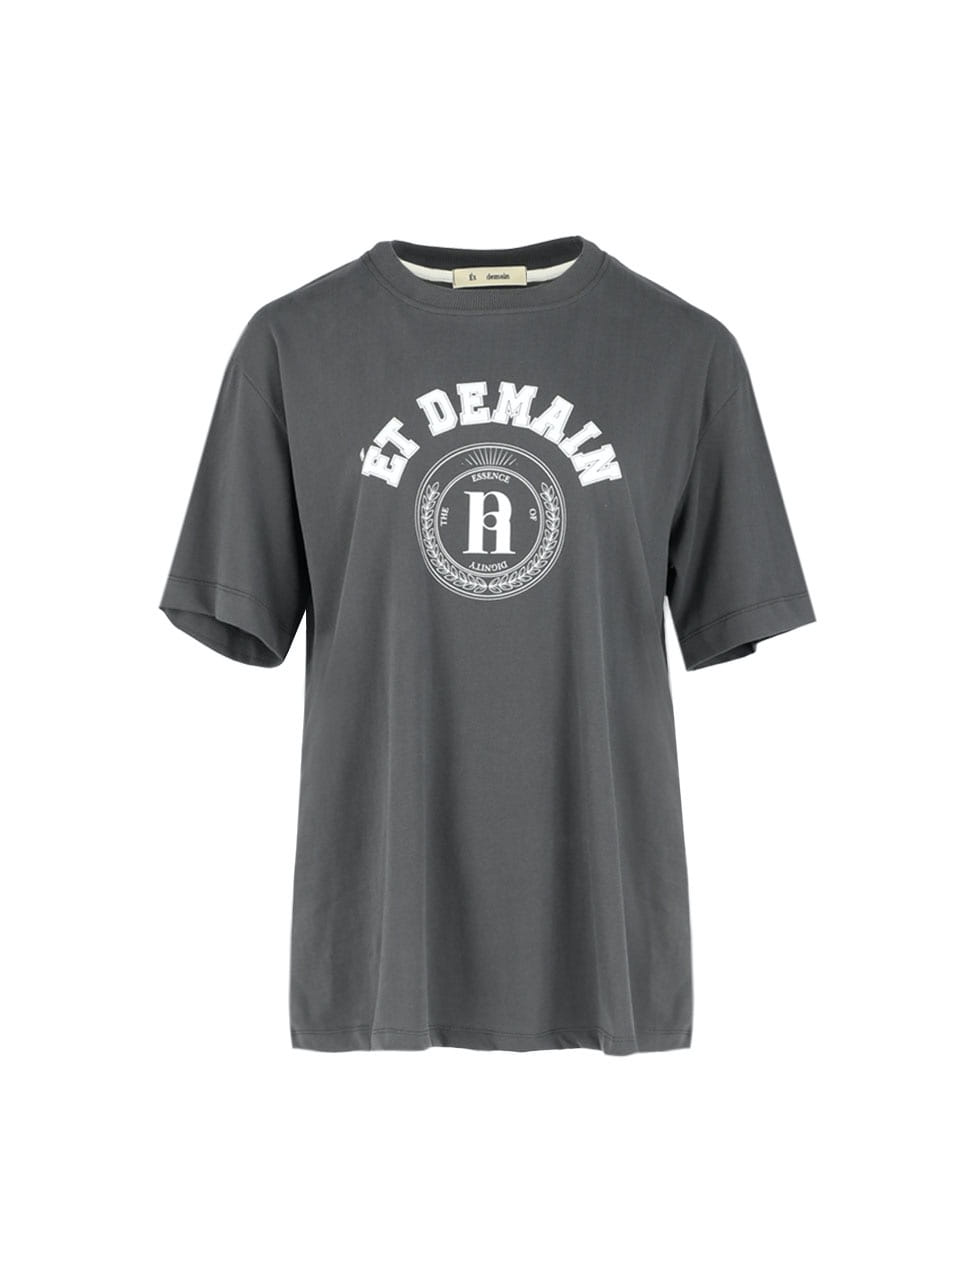 Recycle-cotton logo T-Shirt (Grey)